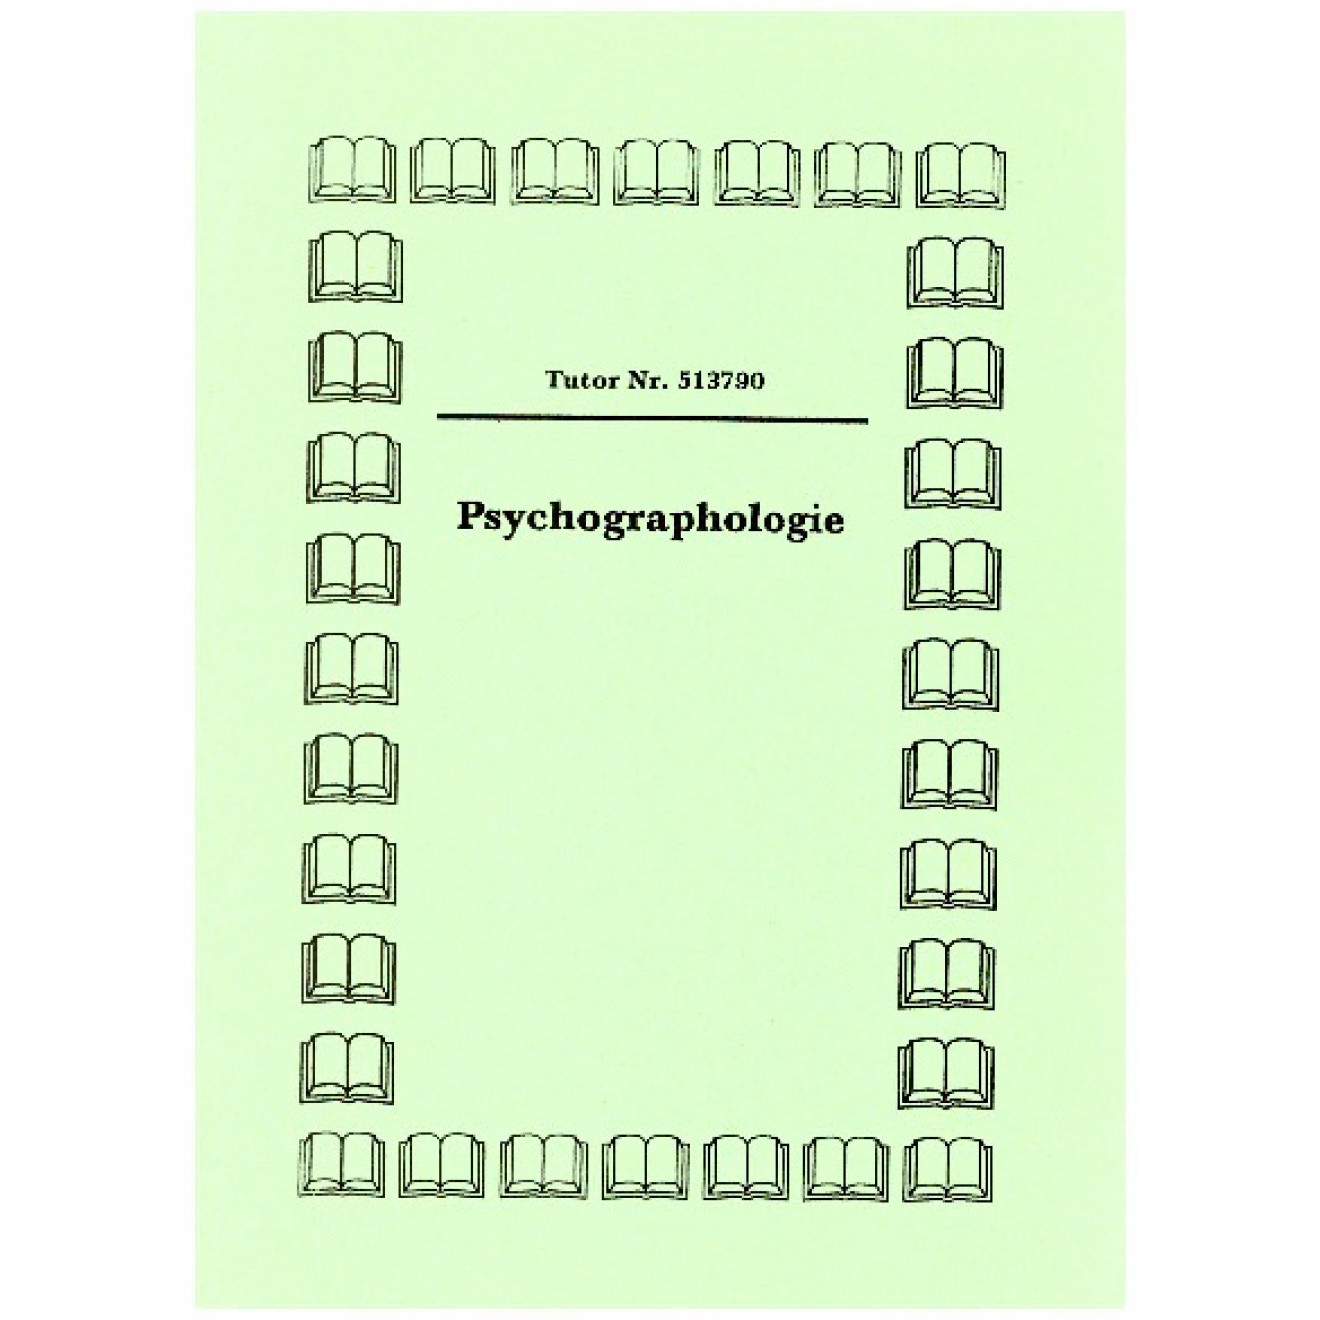 Psychographologie (Skript only)